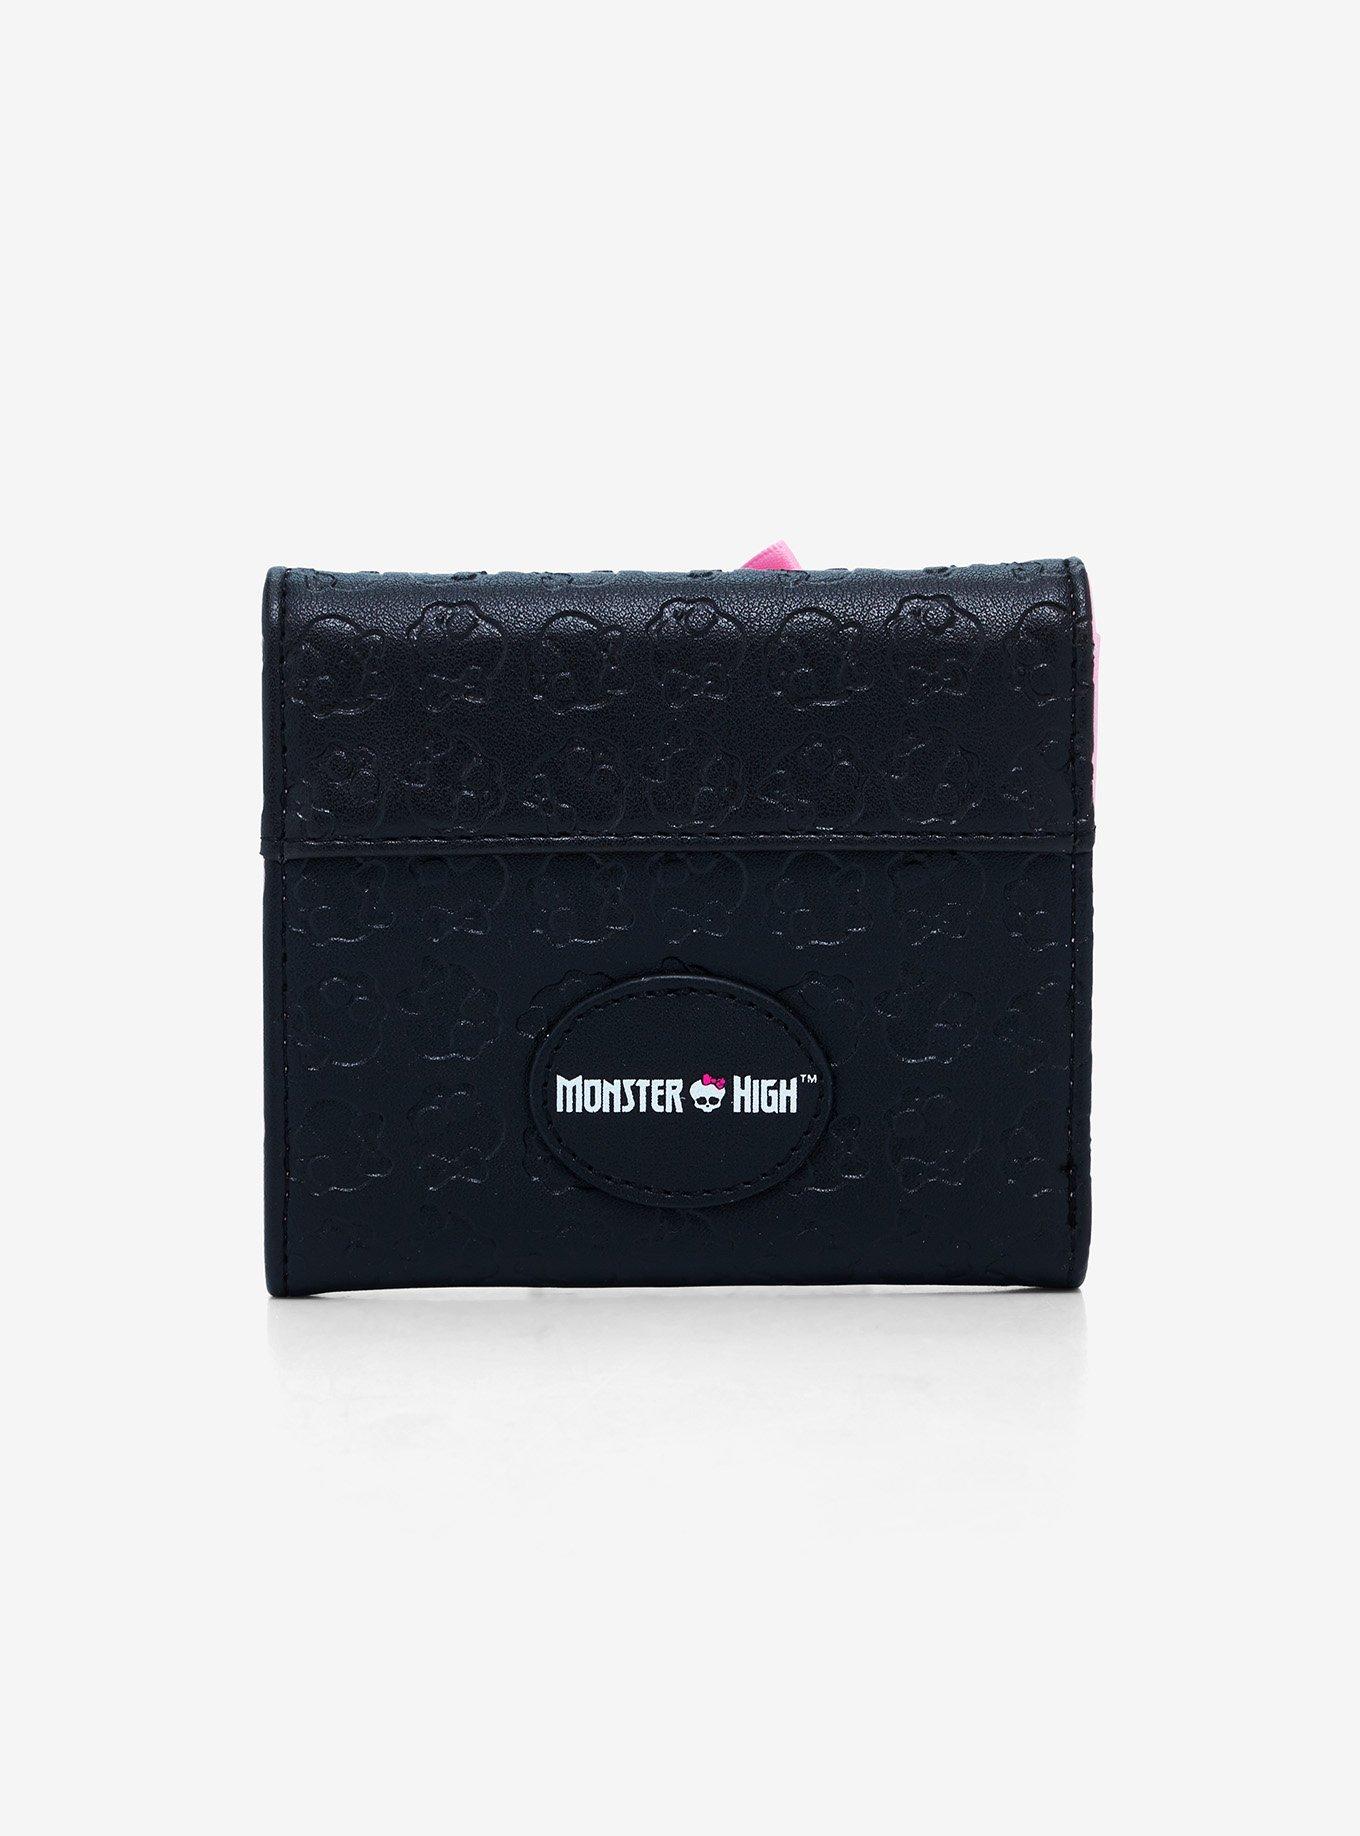 Monster High Skullette Lace-Up Mini Flap Wallet